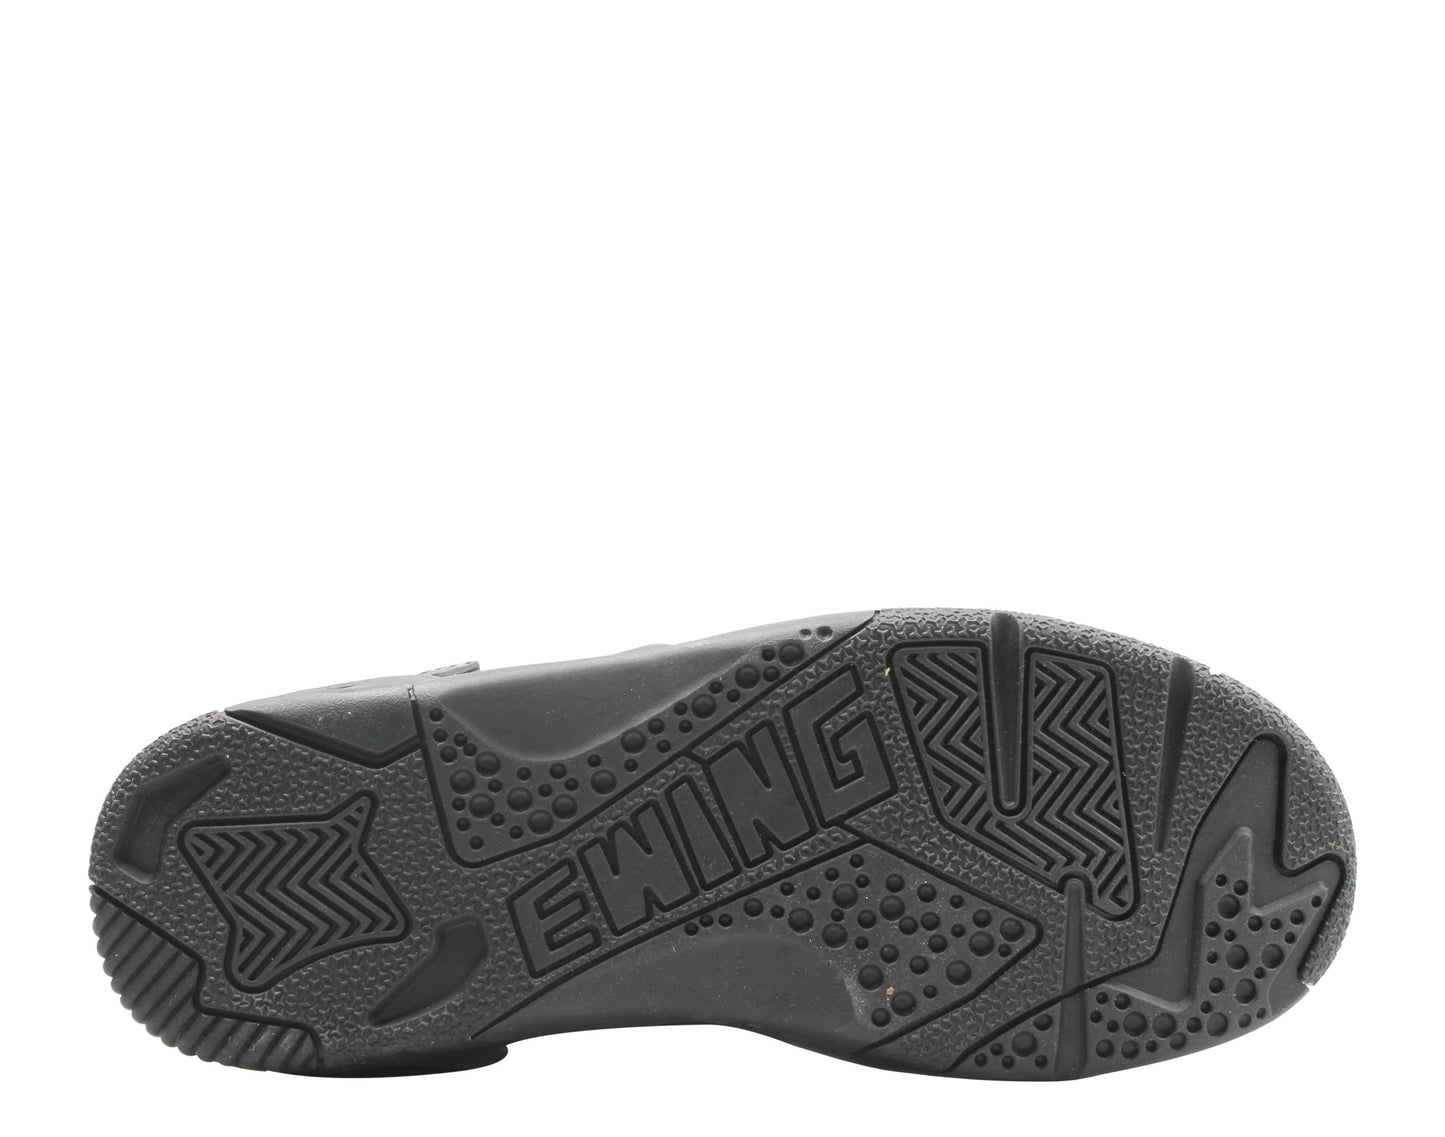 Ewing Athletics Ewing Baseline Silver/Black Men's Basketball Shoes 1BM00758-051